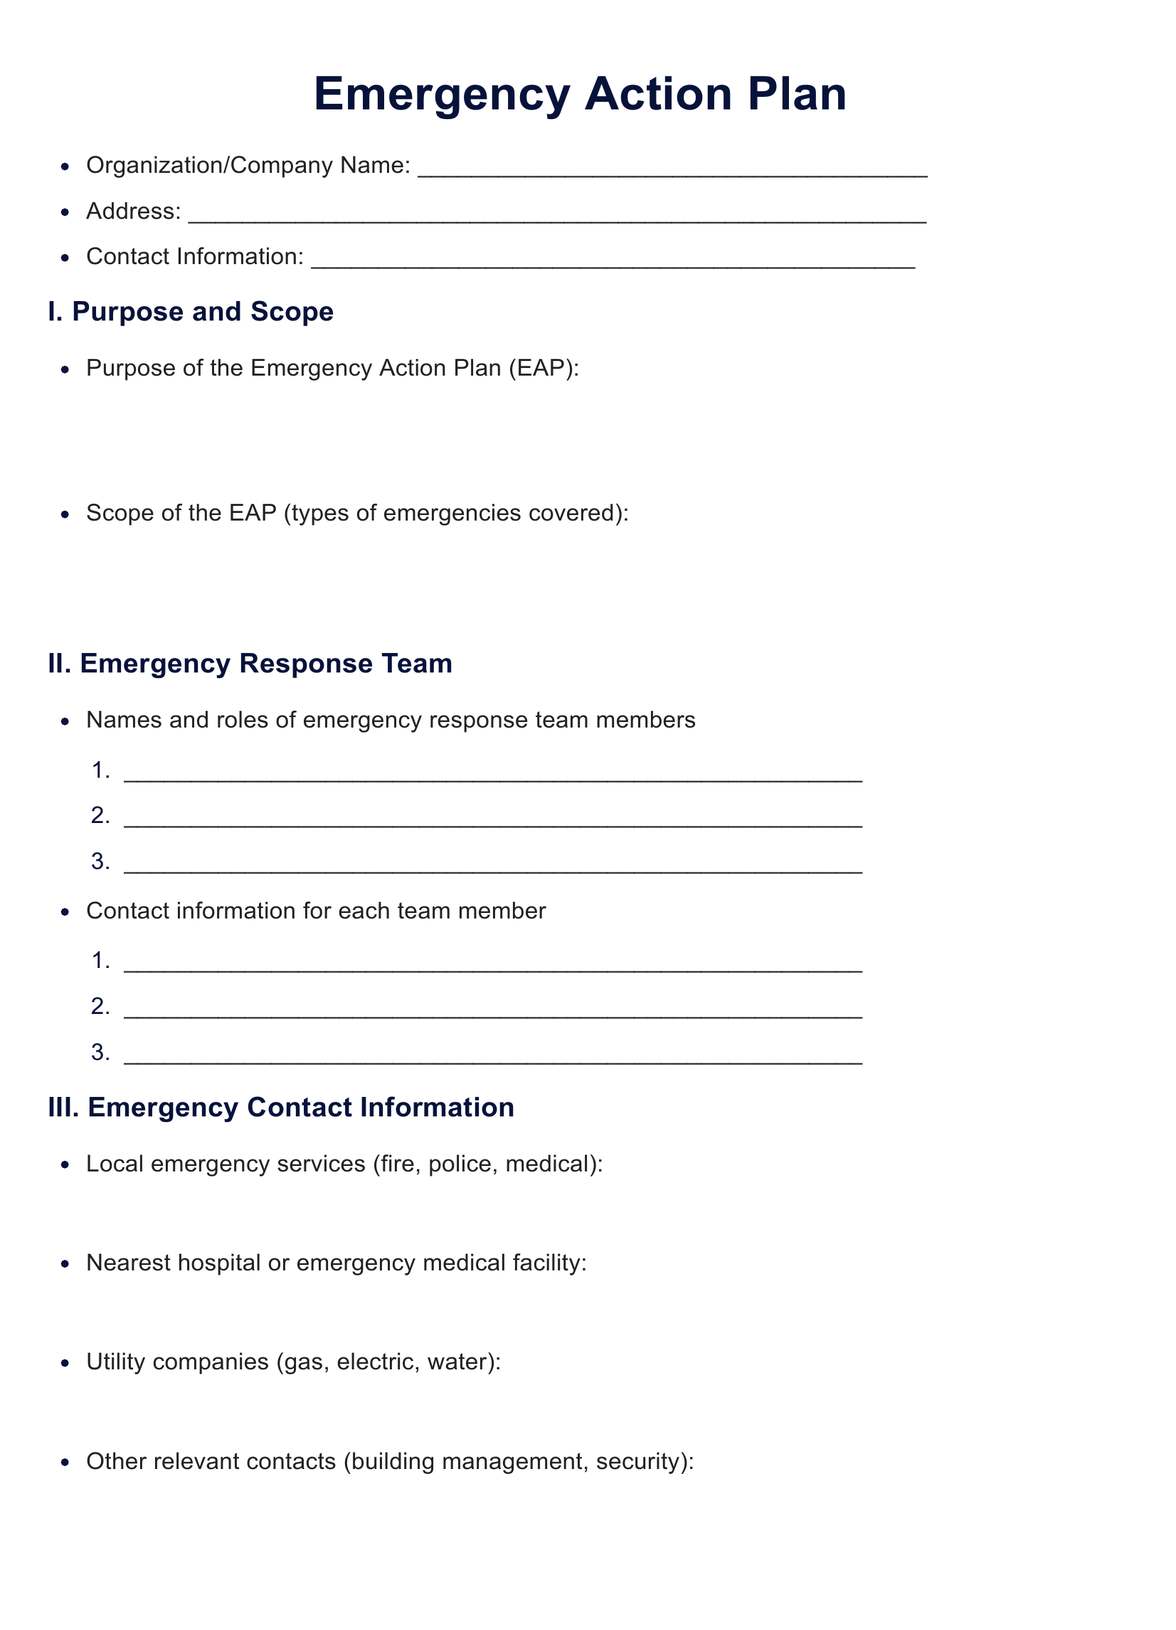 Emergency Action Plan PDF Example